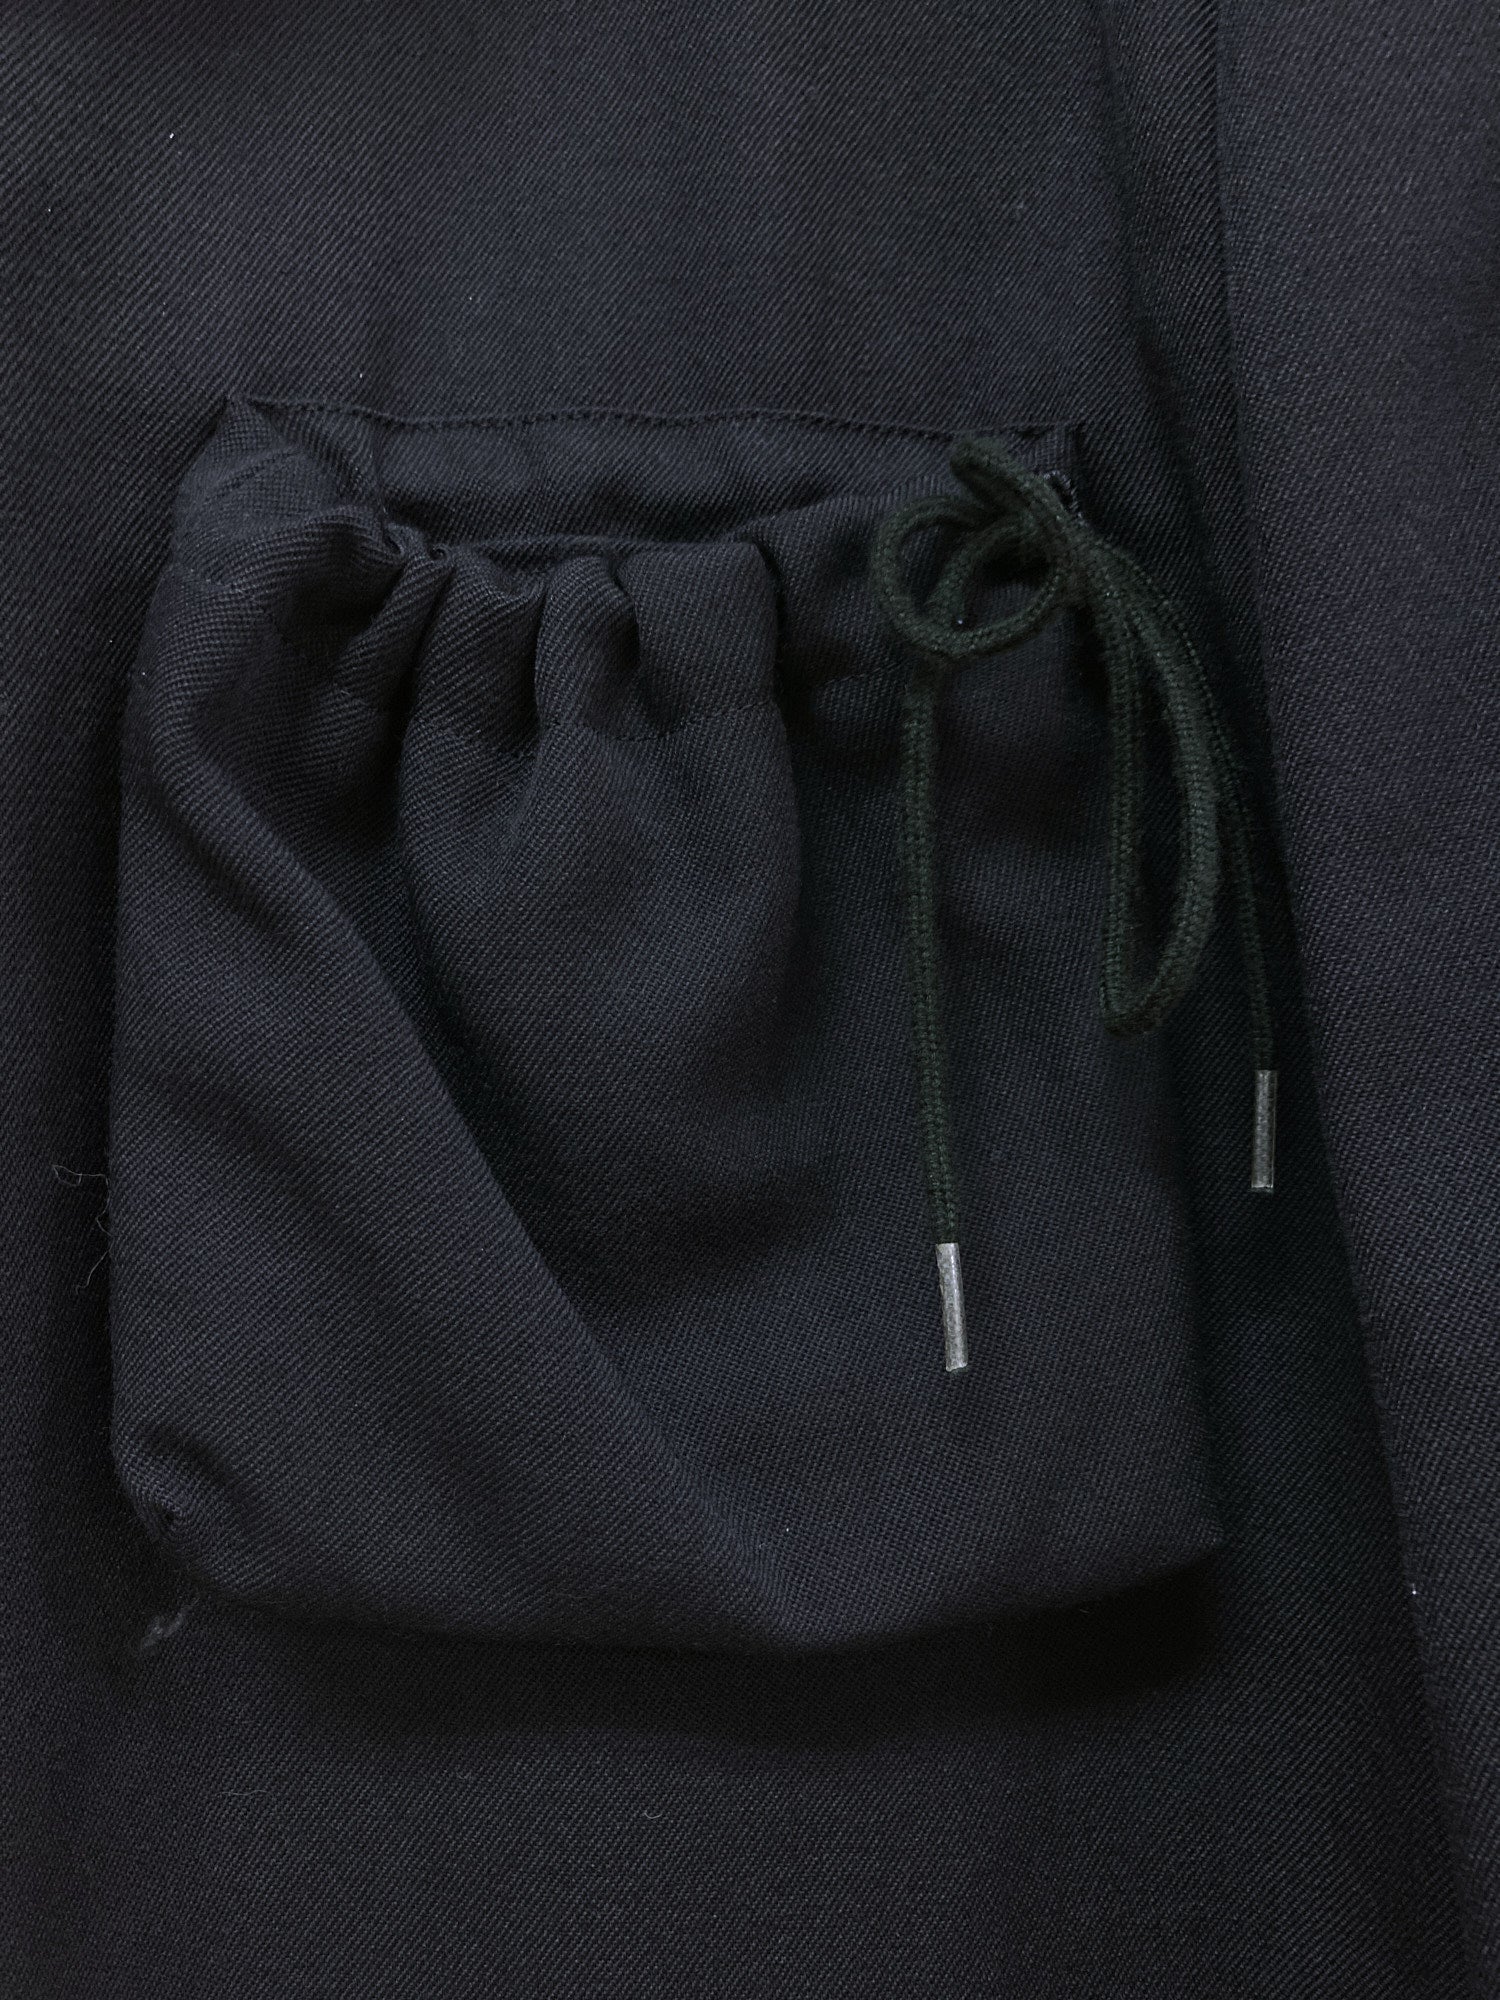 Giuliano Fujiwara very dark navy wool drawstring pocket blazer - size M